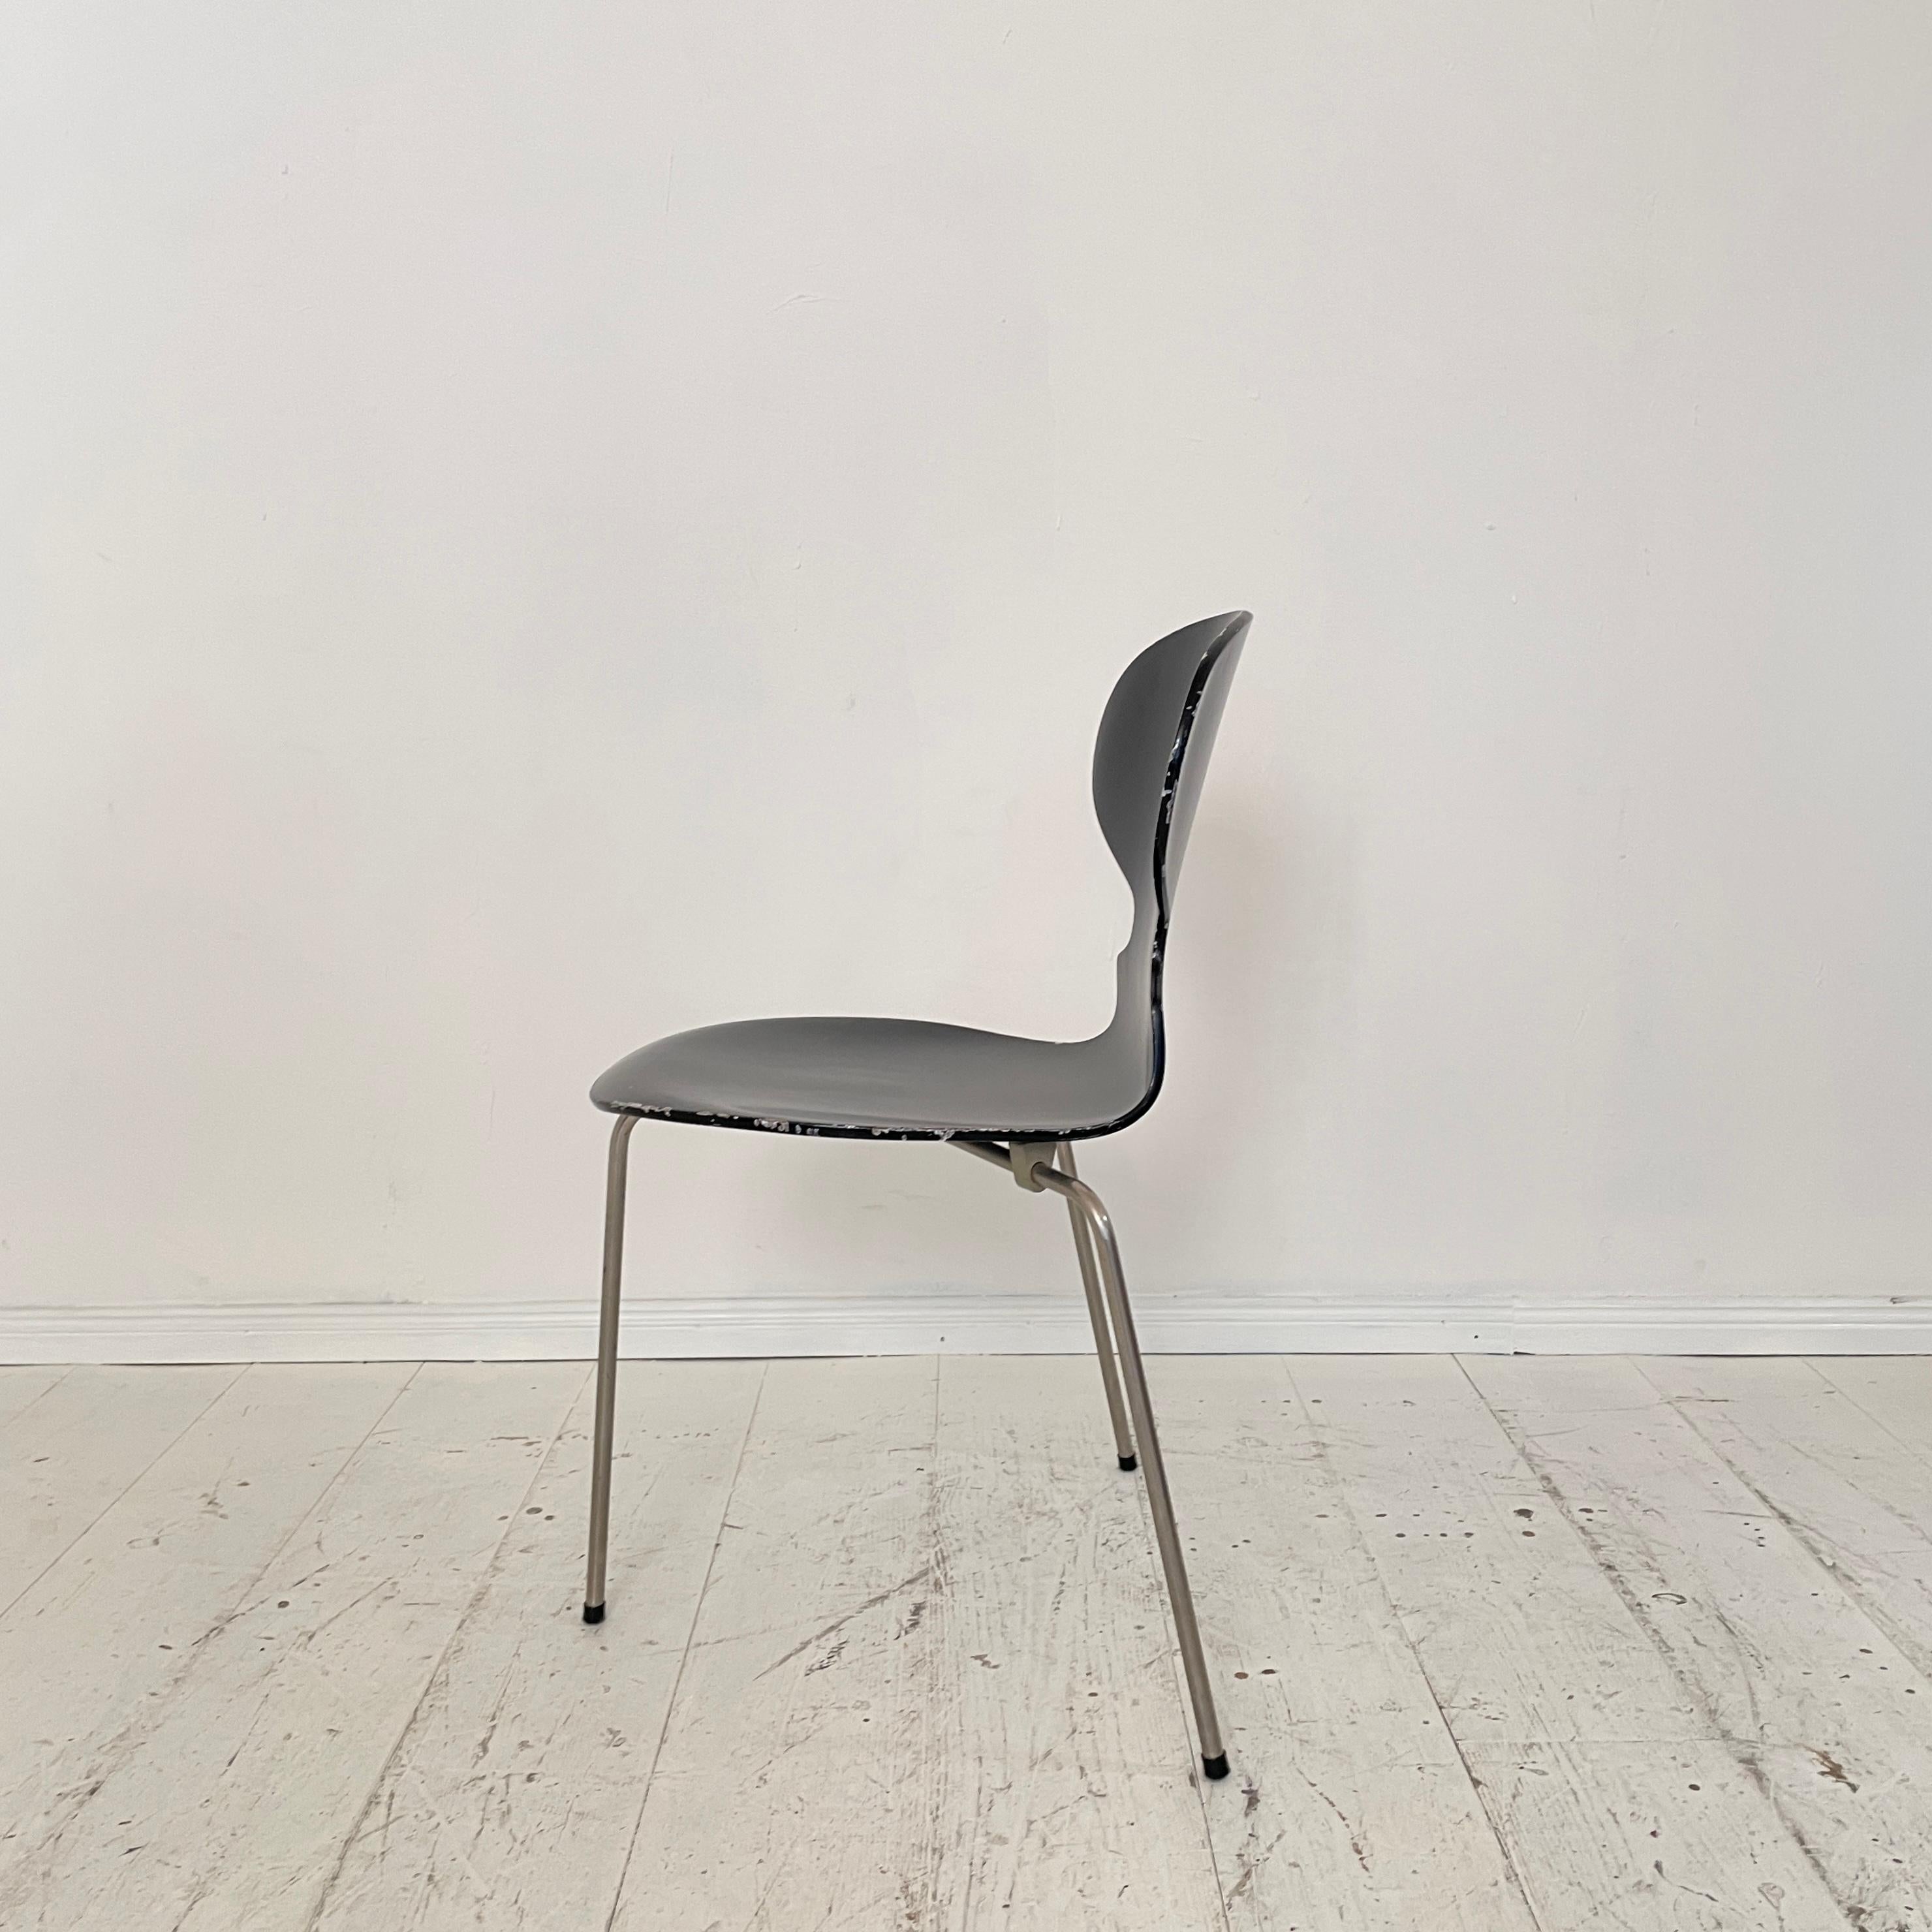 Mid-20th Century Mid-Century Black Ant Chair by Arne Jacobsen for Fritz Hansen, around 1957